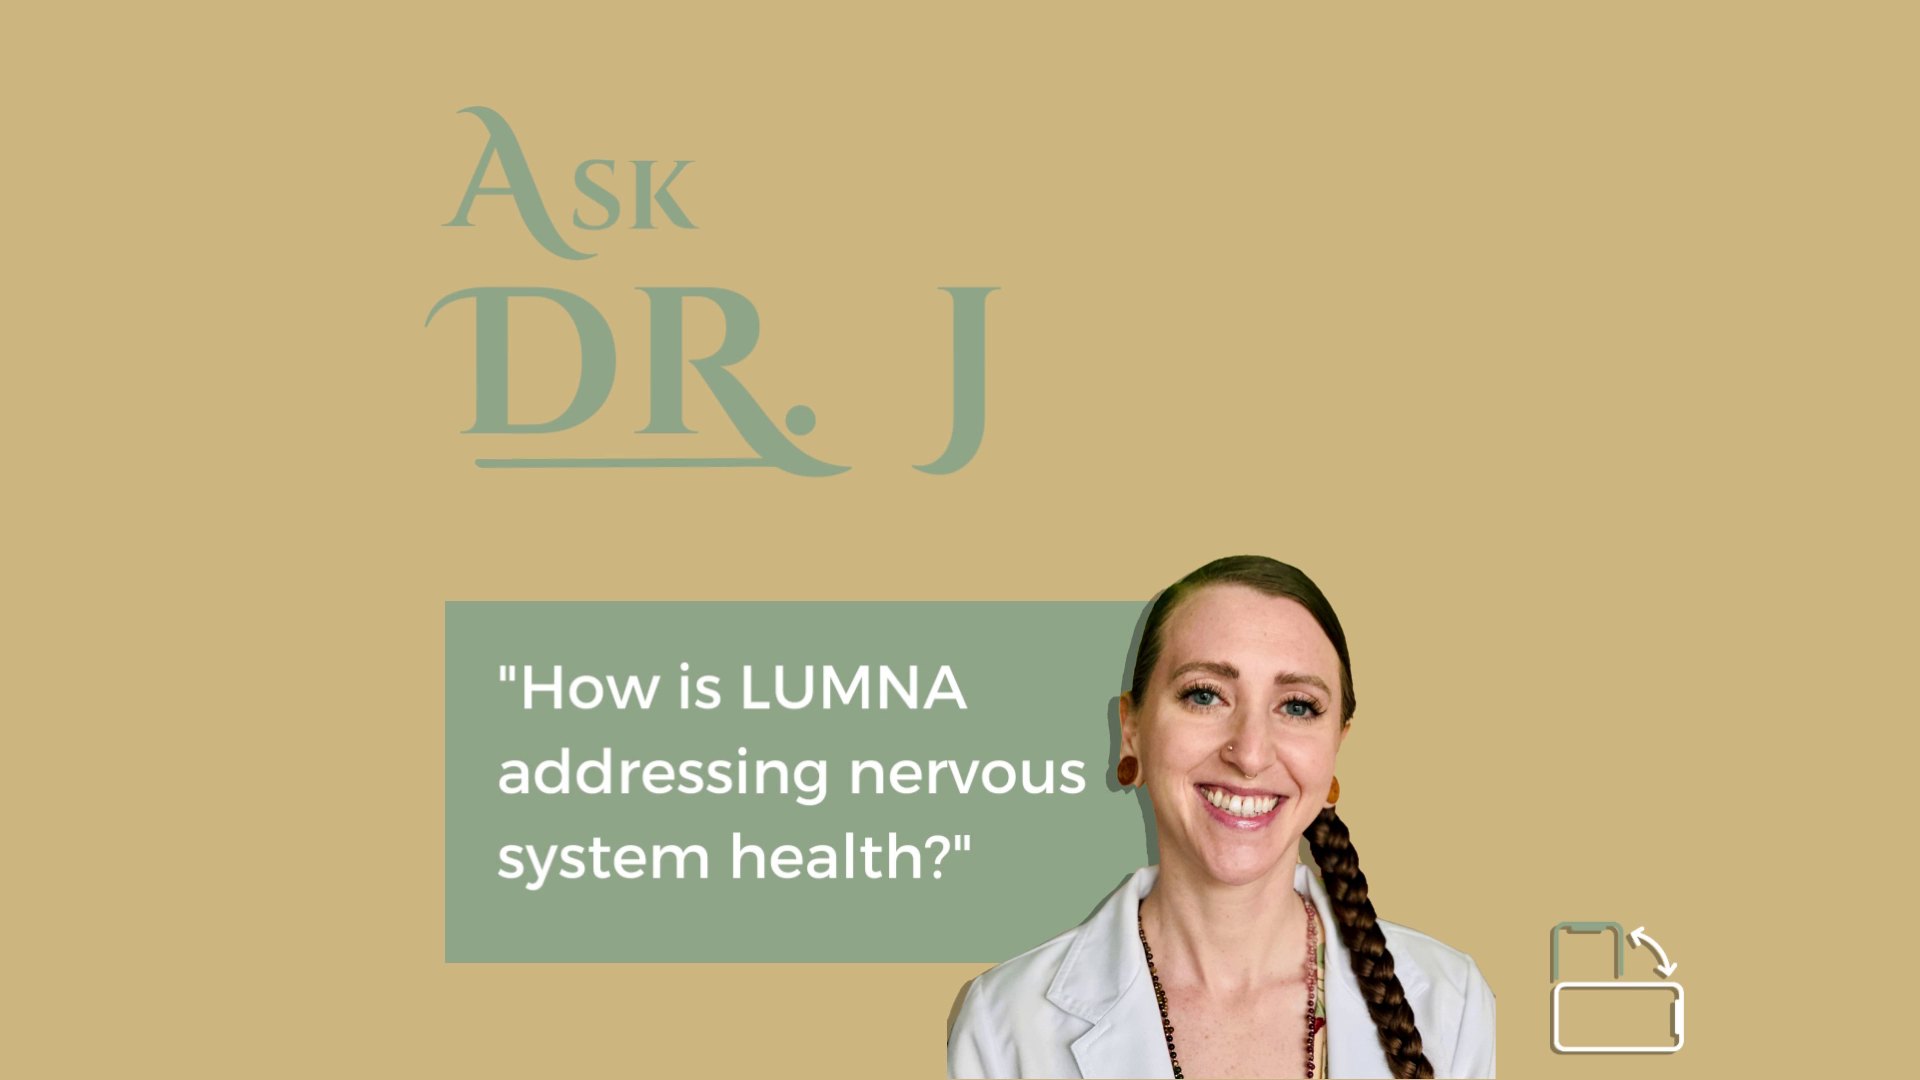 Load video: How is LUMNA addressing nervous system health?